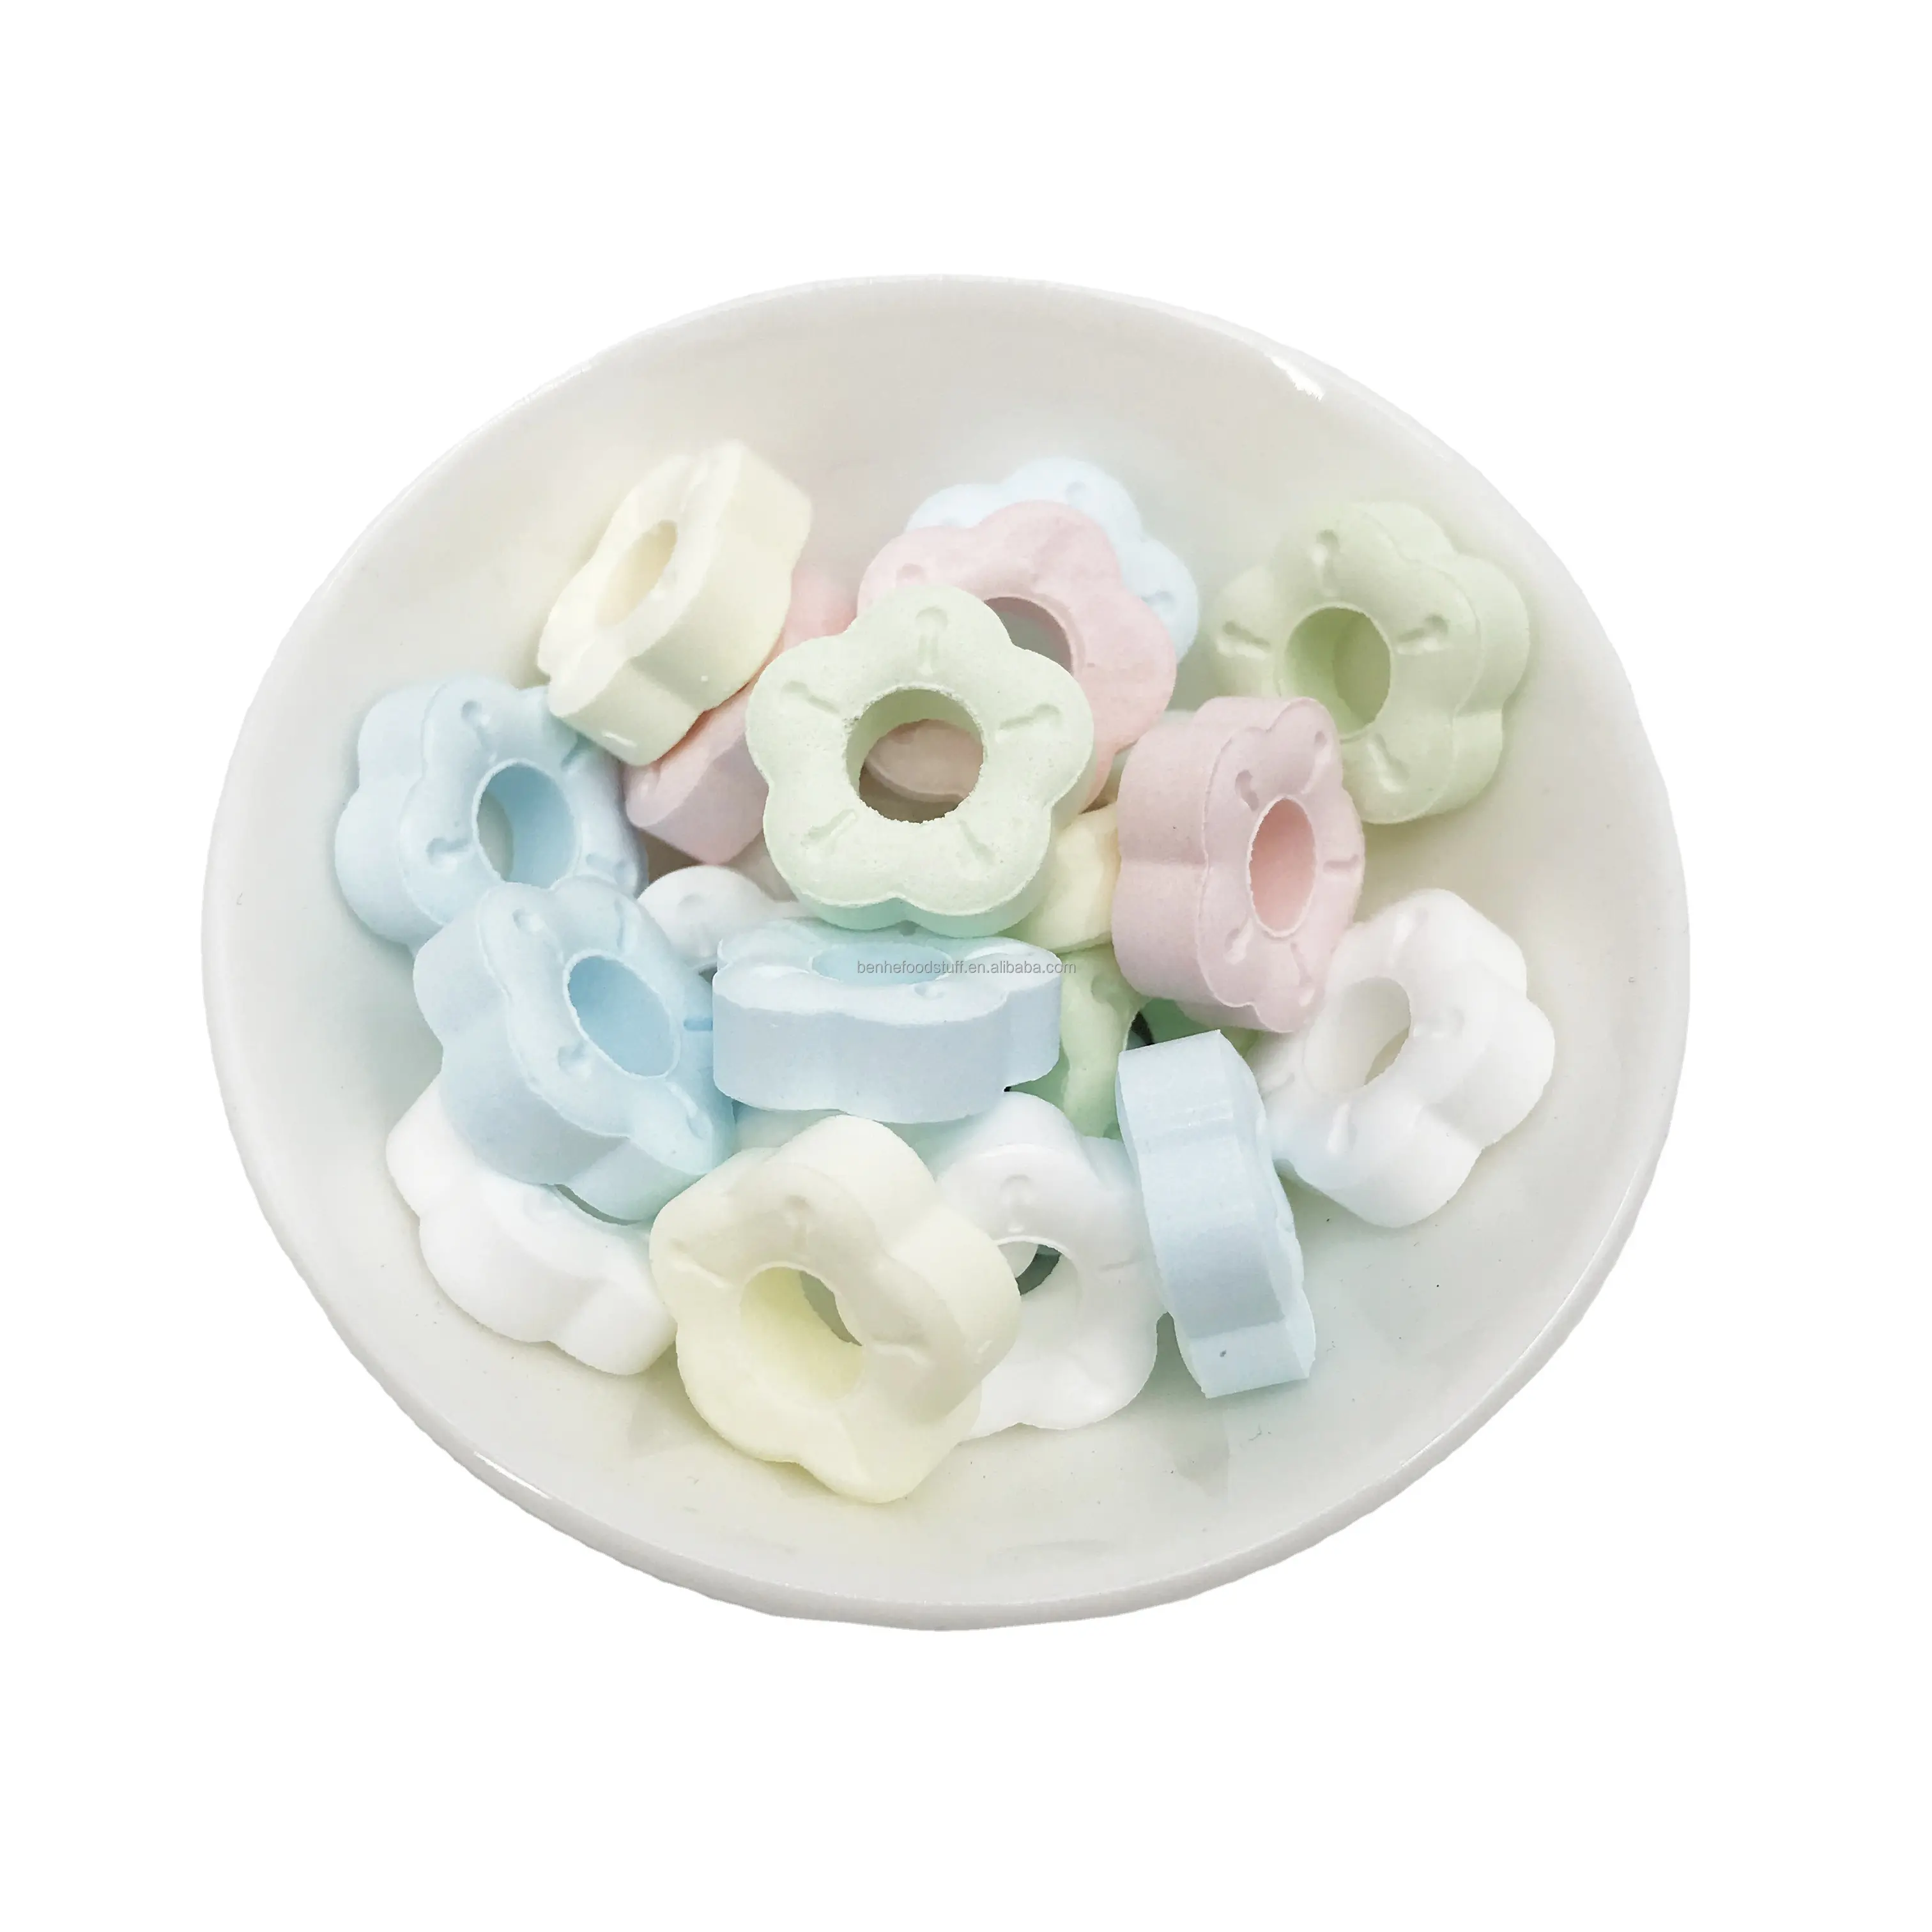 Groothandel Suiker Gratis Sweets Chaozhou Fabricage 500gr Mint Tablet Snoep Met Vitaminen